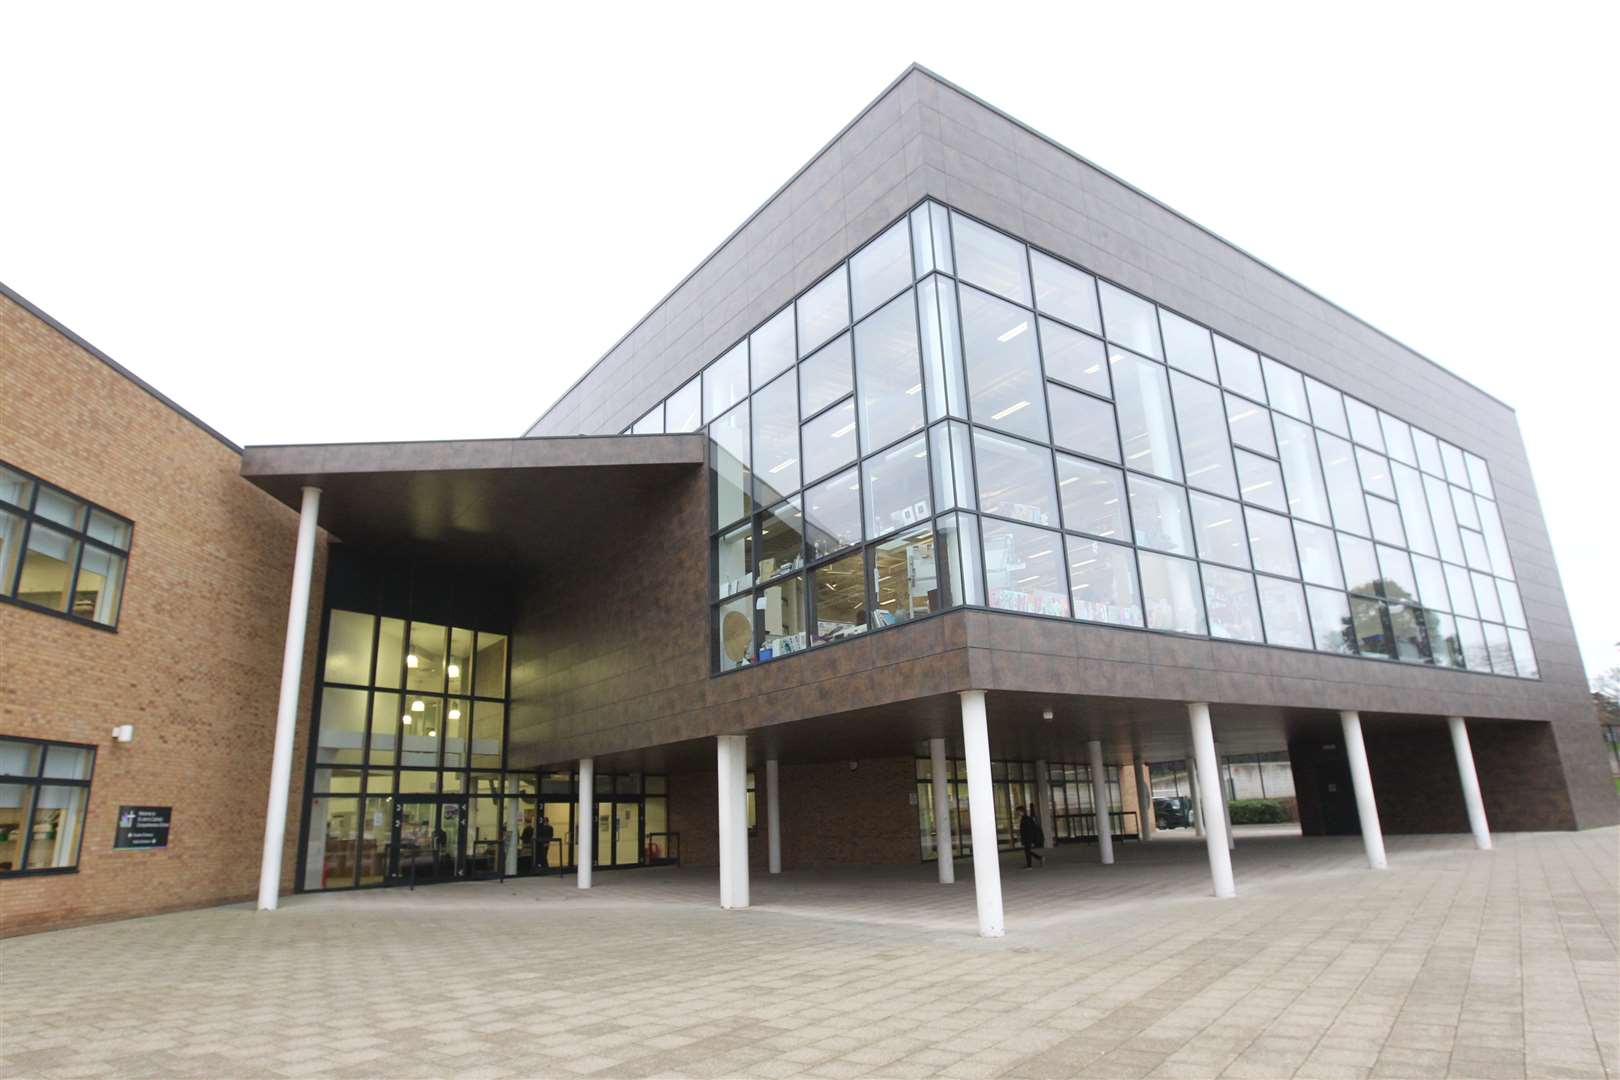 St John's Comprehensive School set to expand